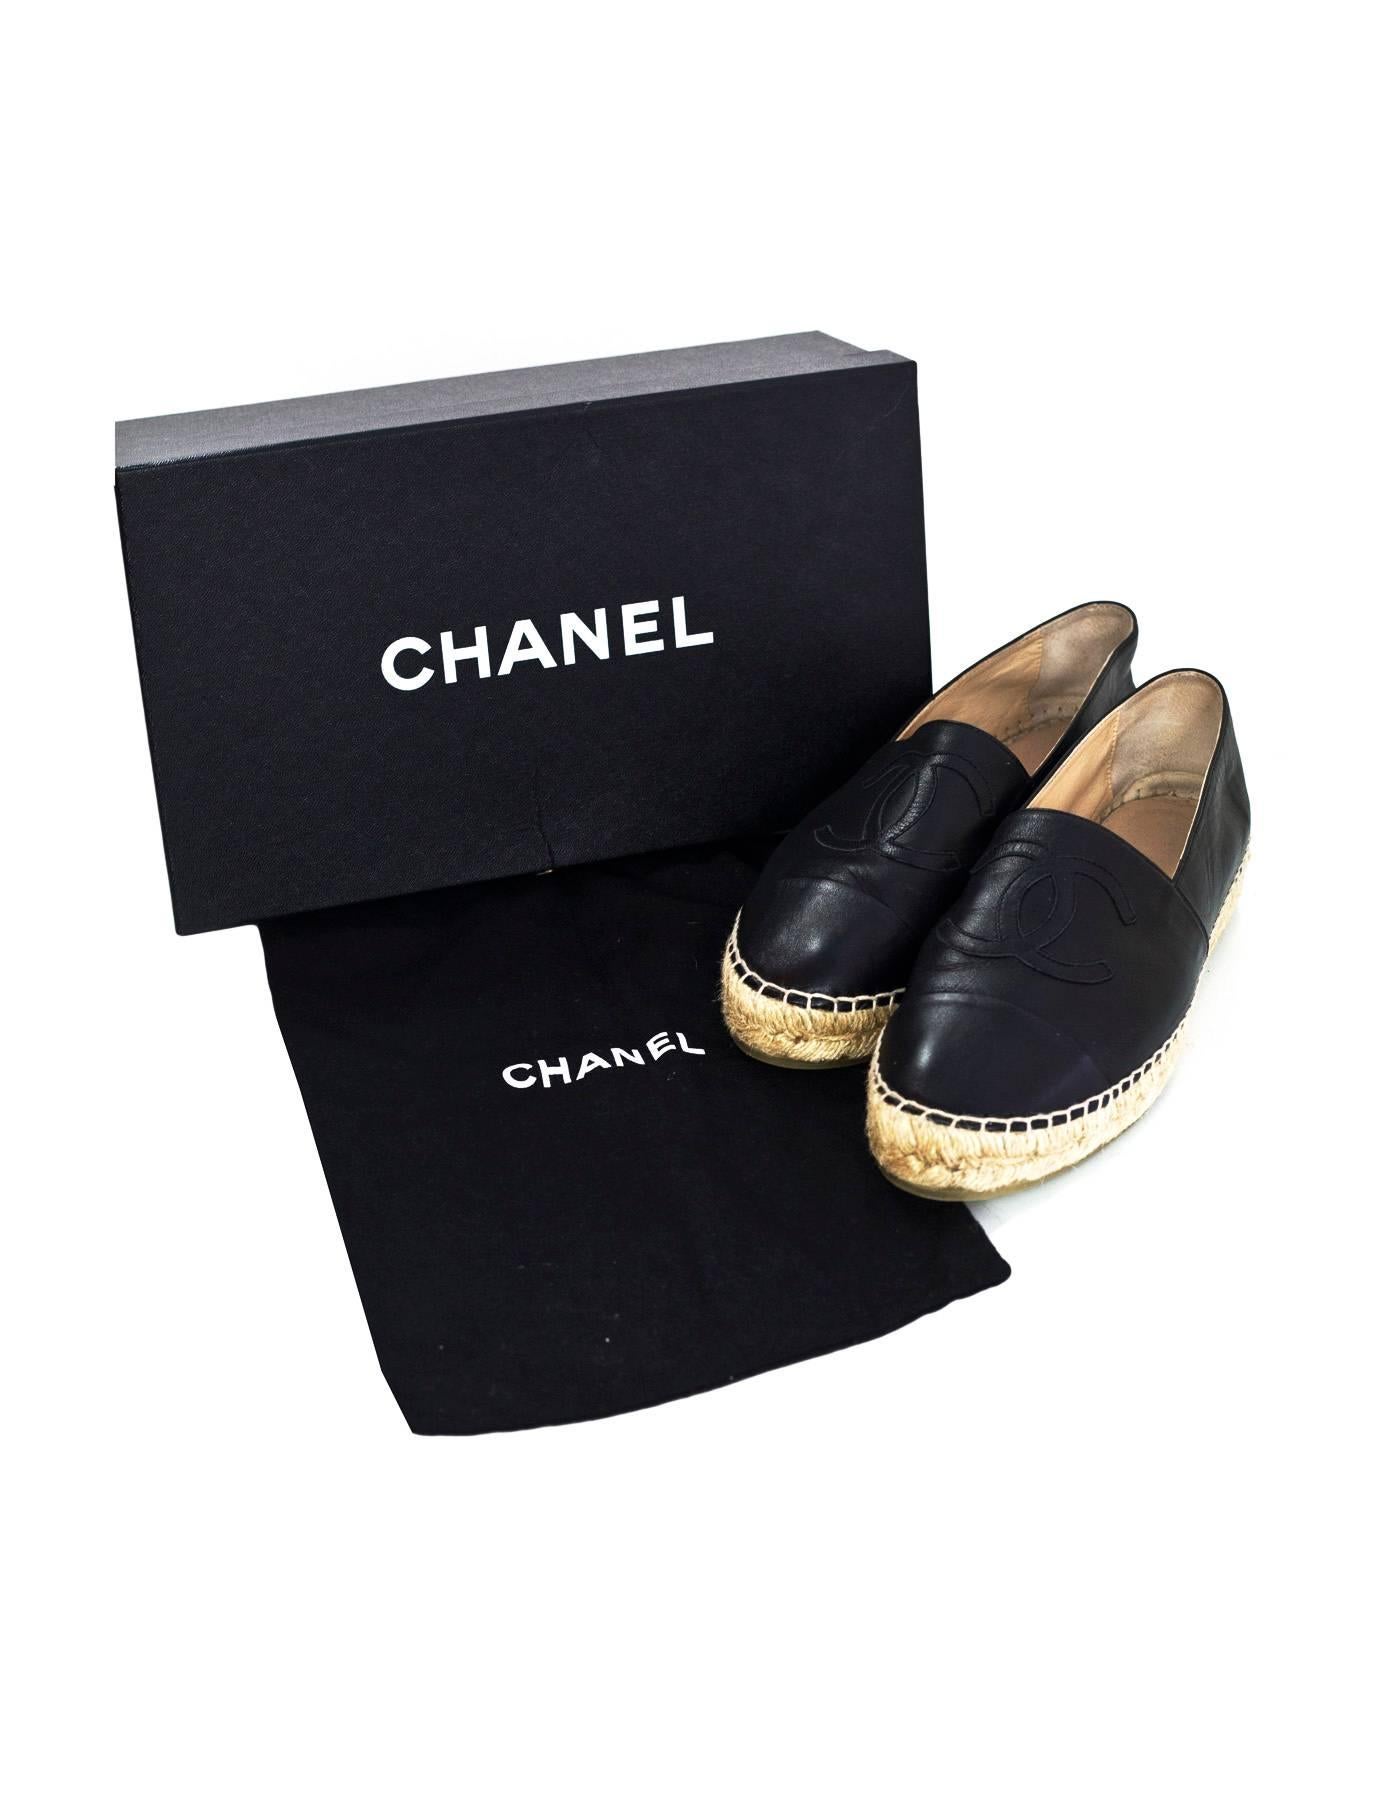 Chanel Black Leather CC Espadrilles Sz 37 with Box 2